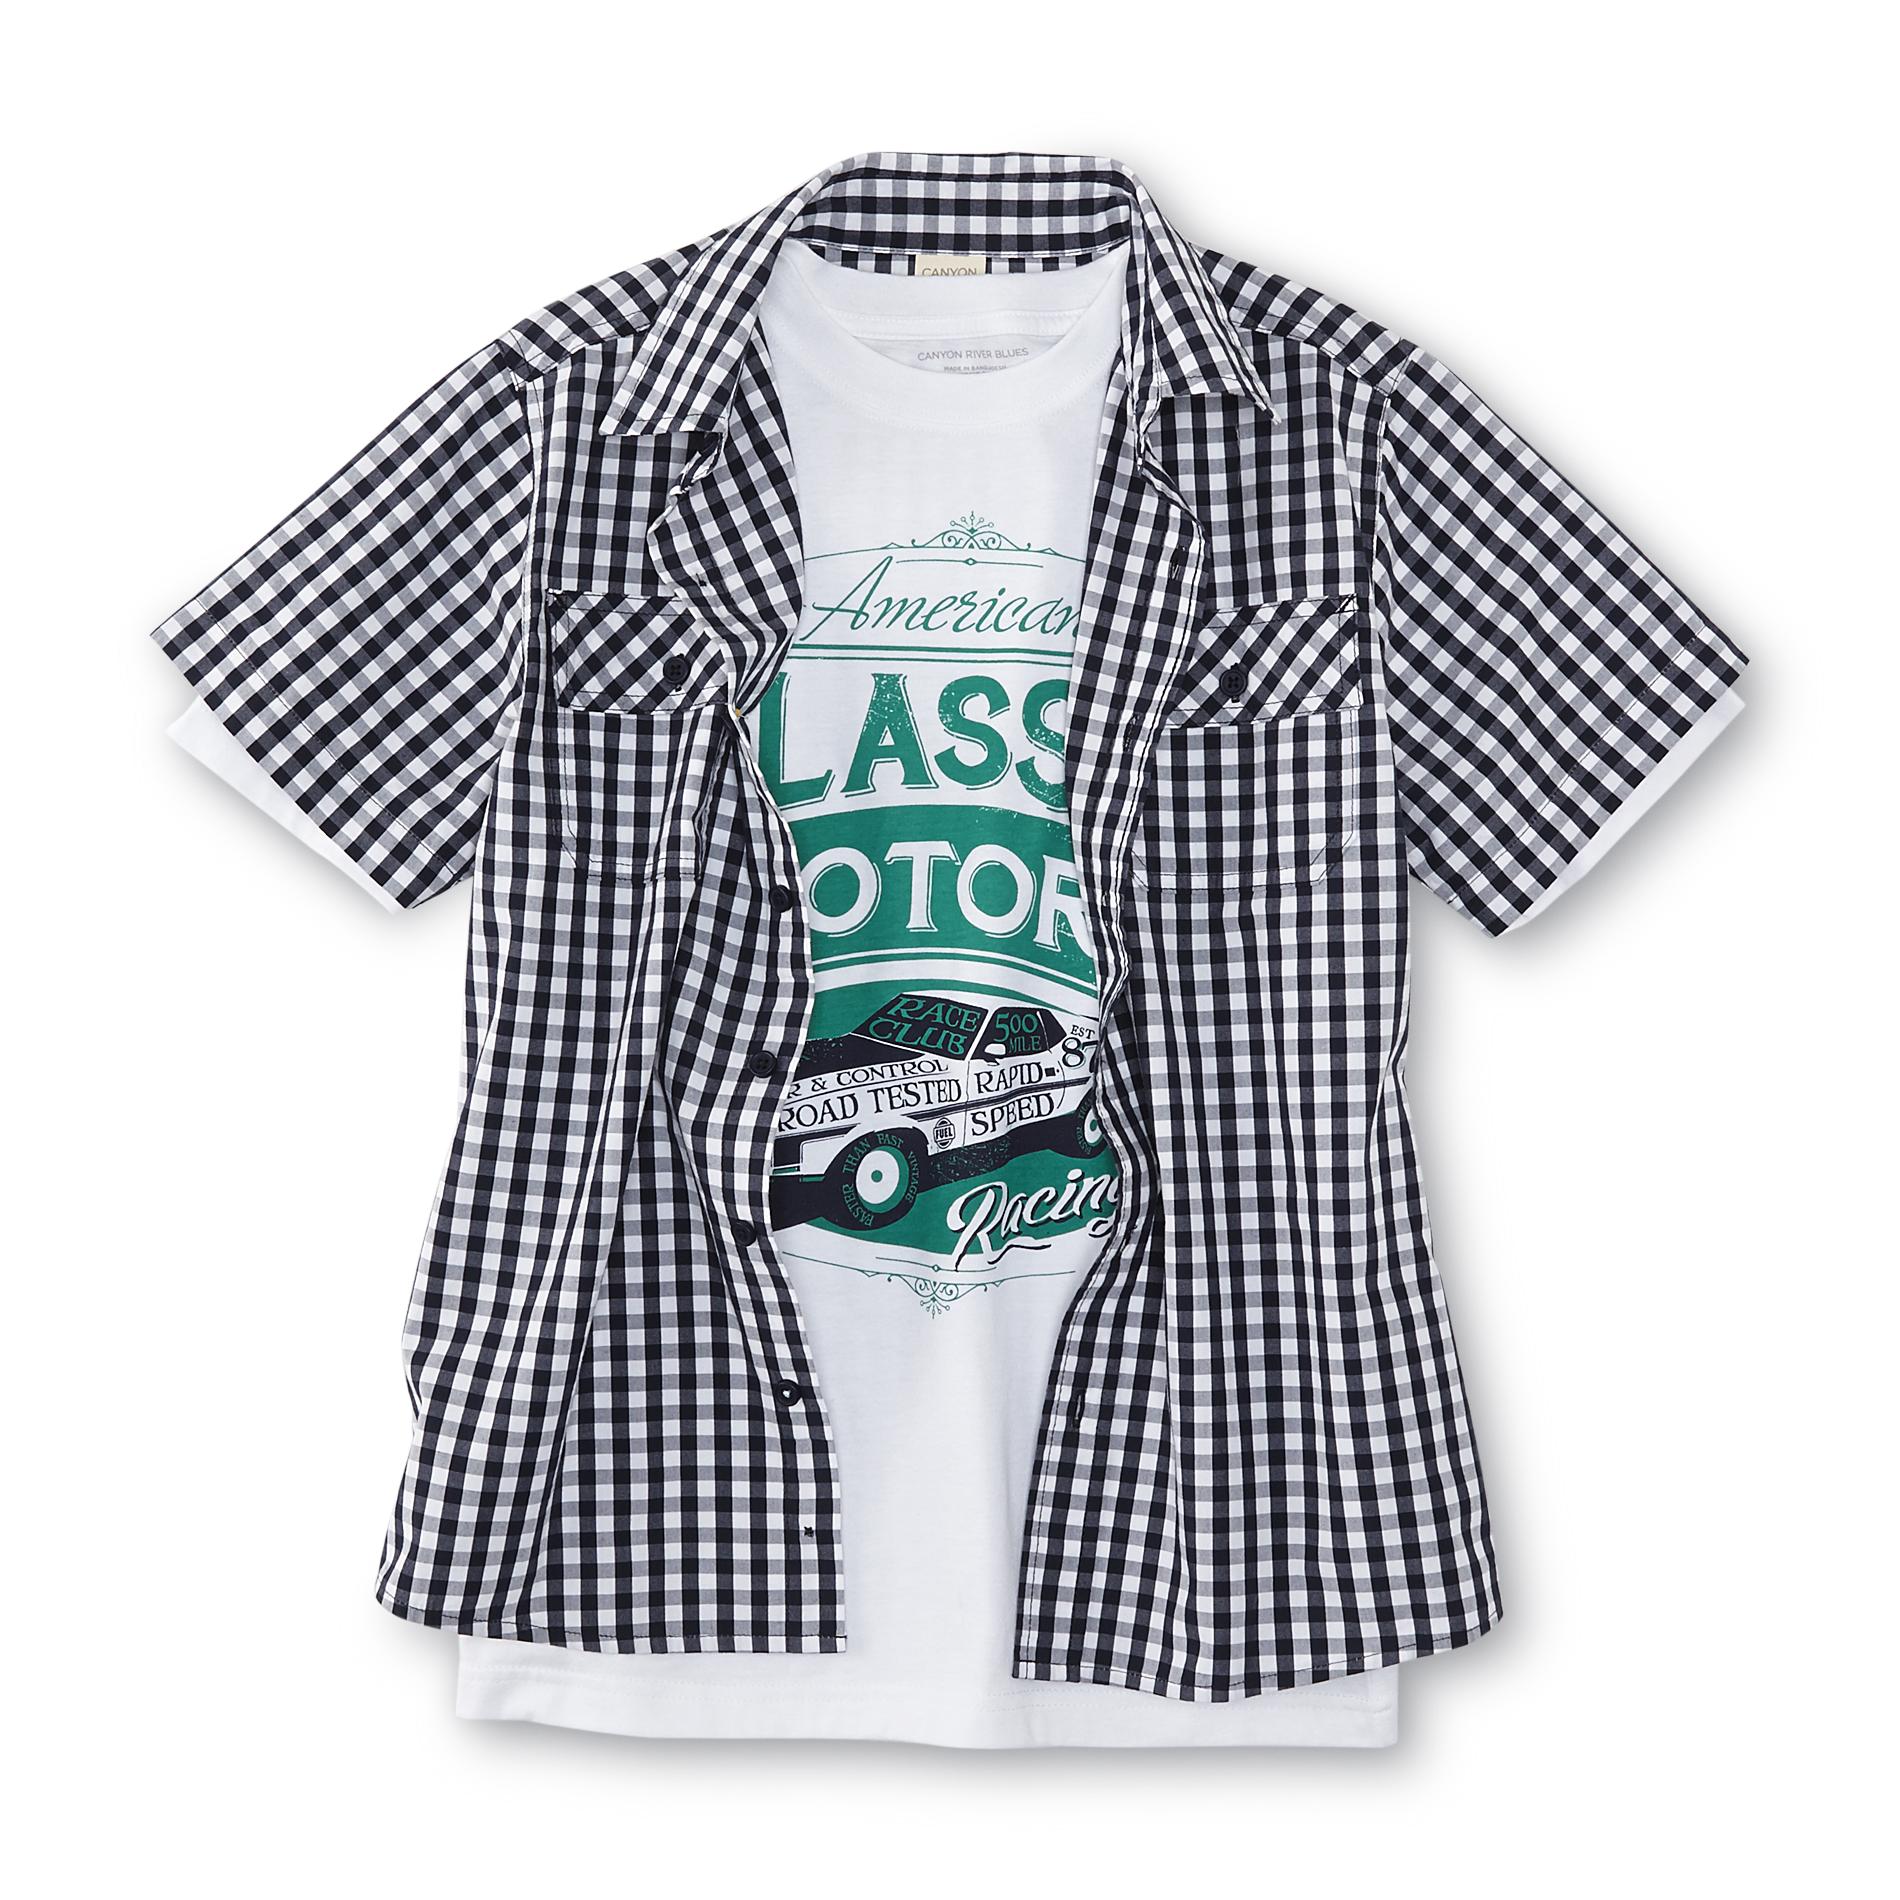 Canyon River Blues Boy's Woven Shirt & T-Shirt - Checkered